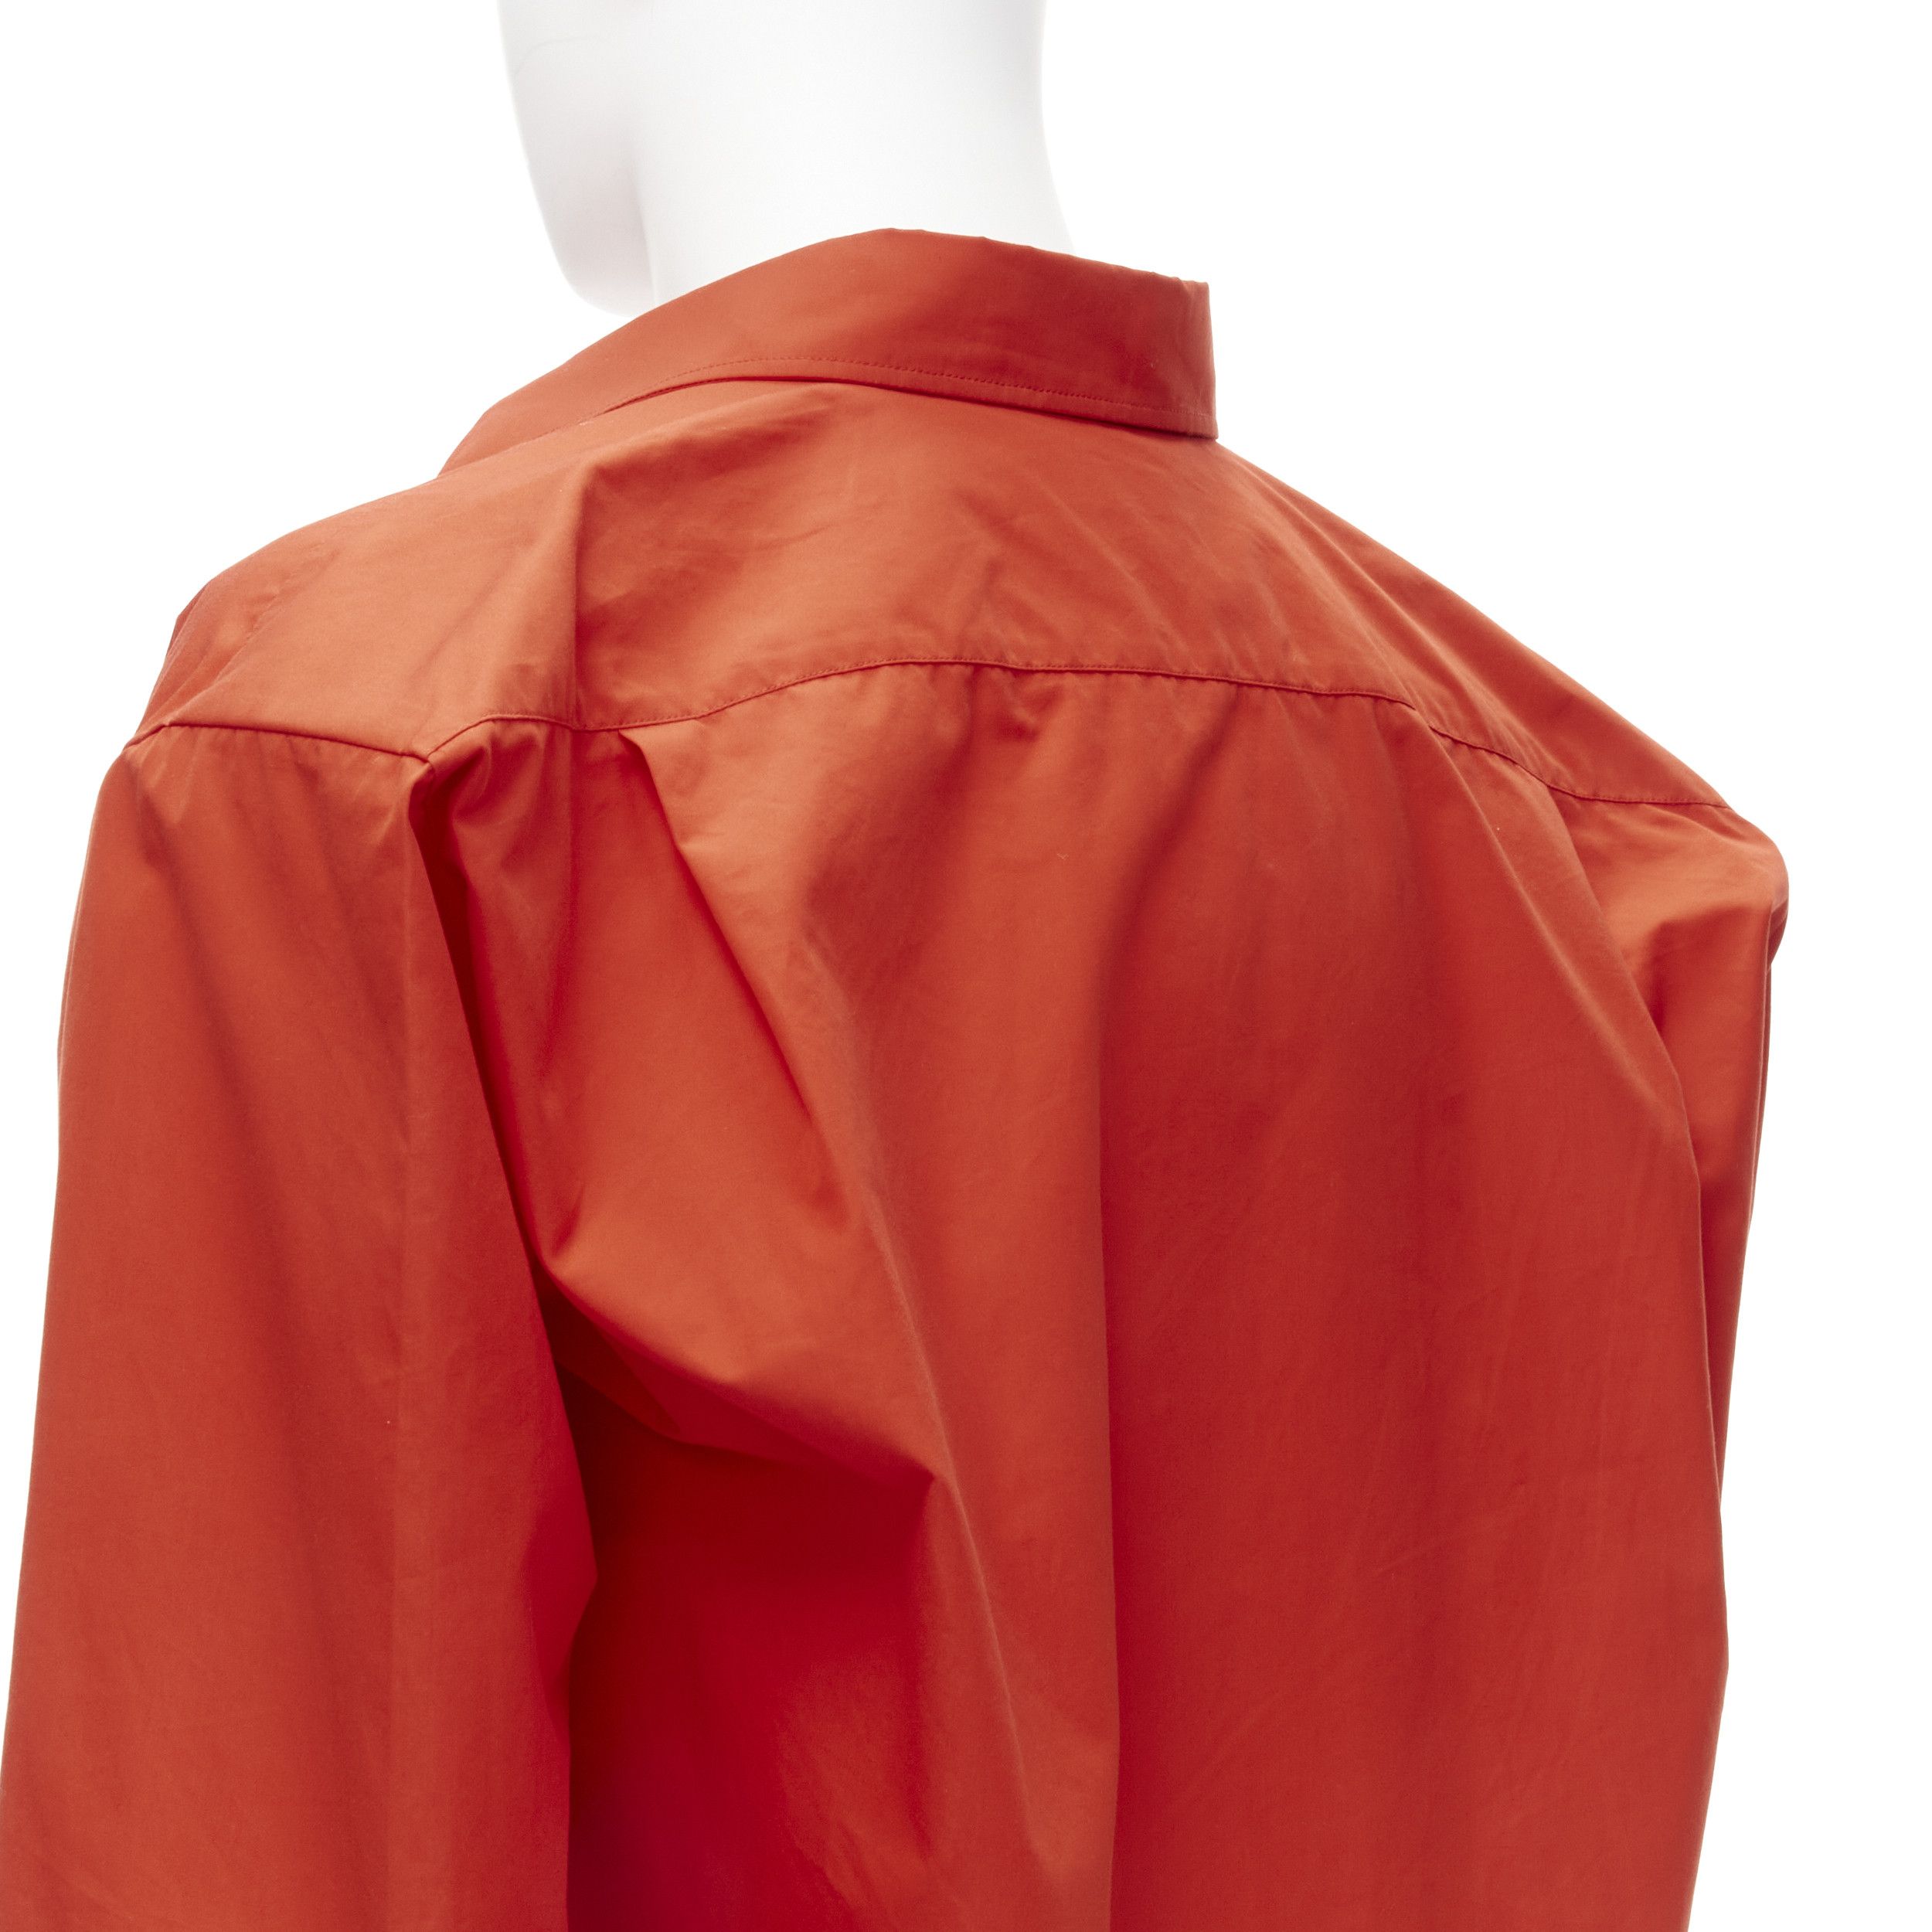 Balenciaga BALENCIAGA Cocoon red swing collar 3D cut oversized button down shirt Size M / US 6-8 / IT 42-44 - 6 Thumbnail